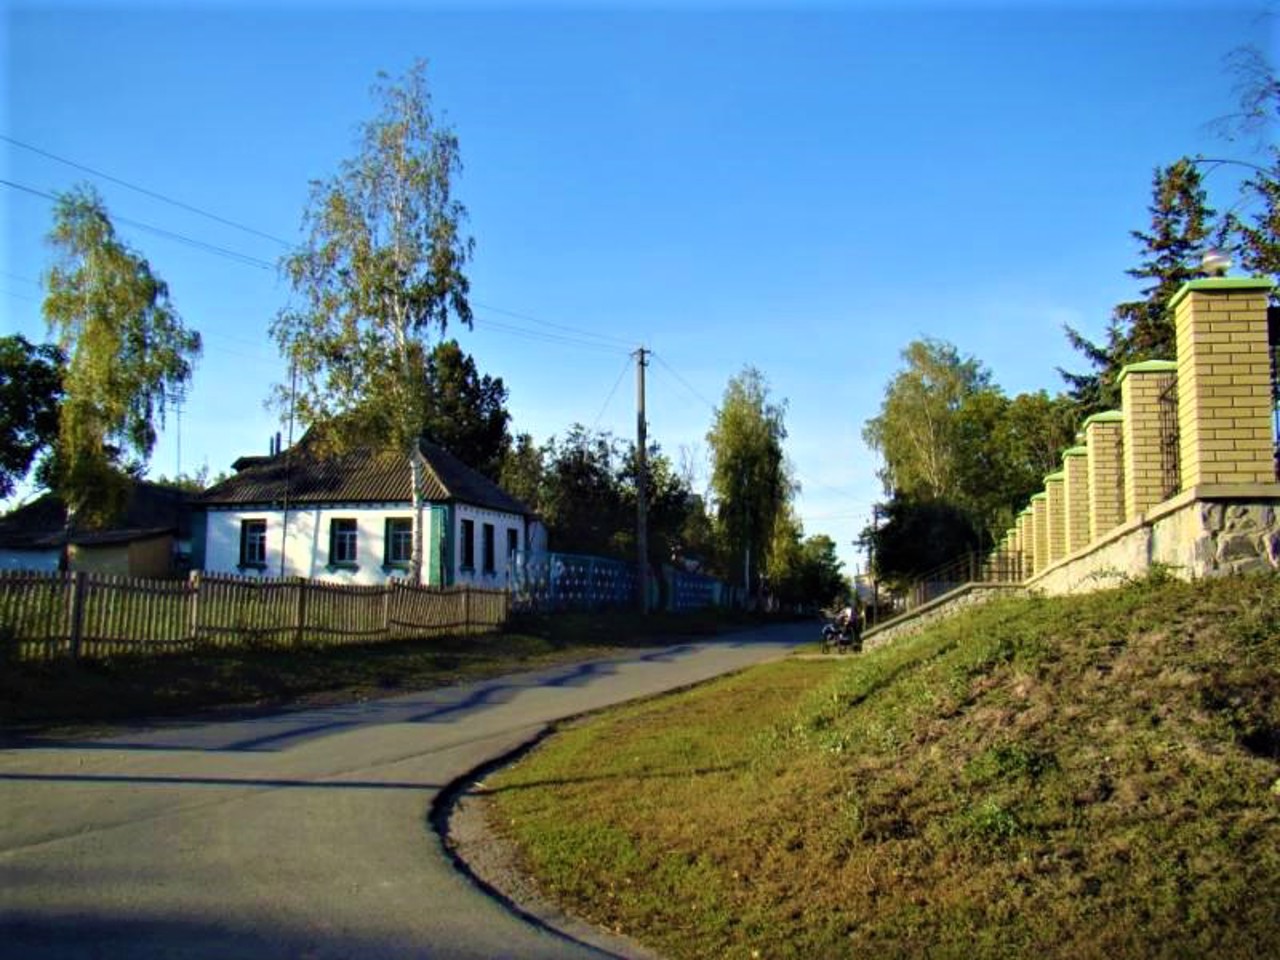 Hiltsi village